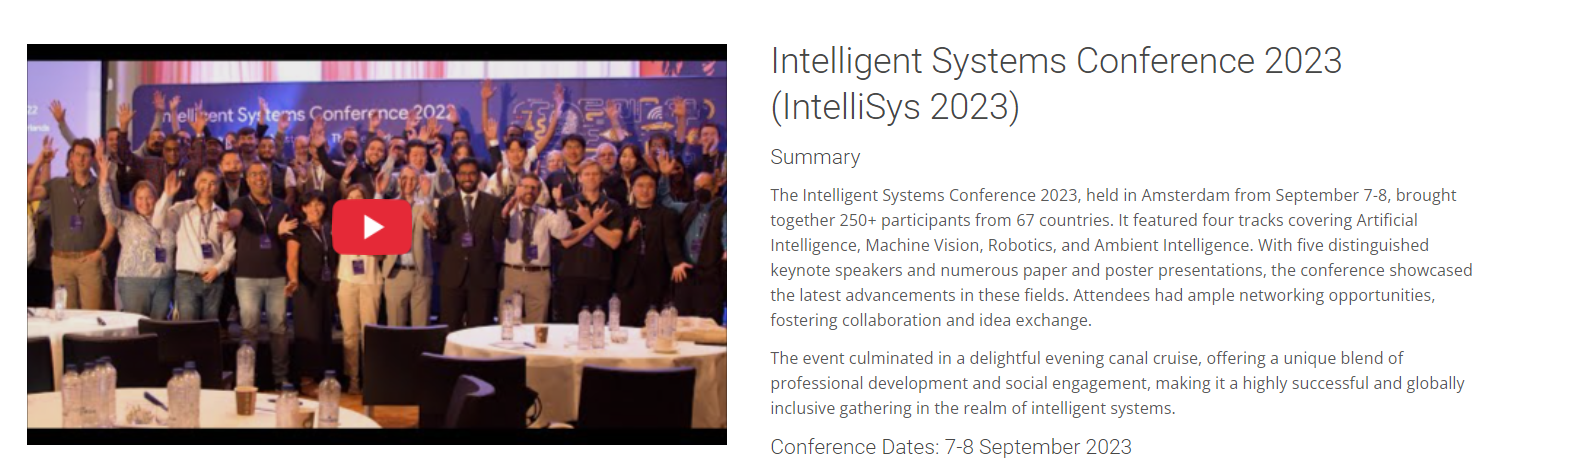 Intelligent Systems Conference 2023 Konferenz